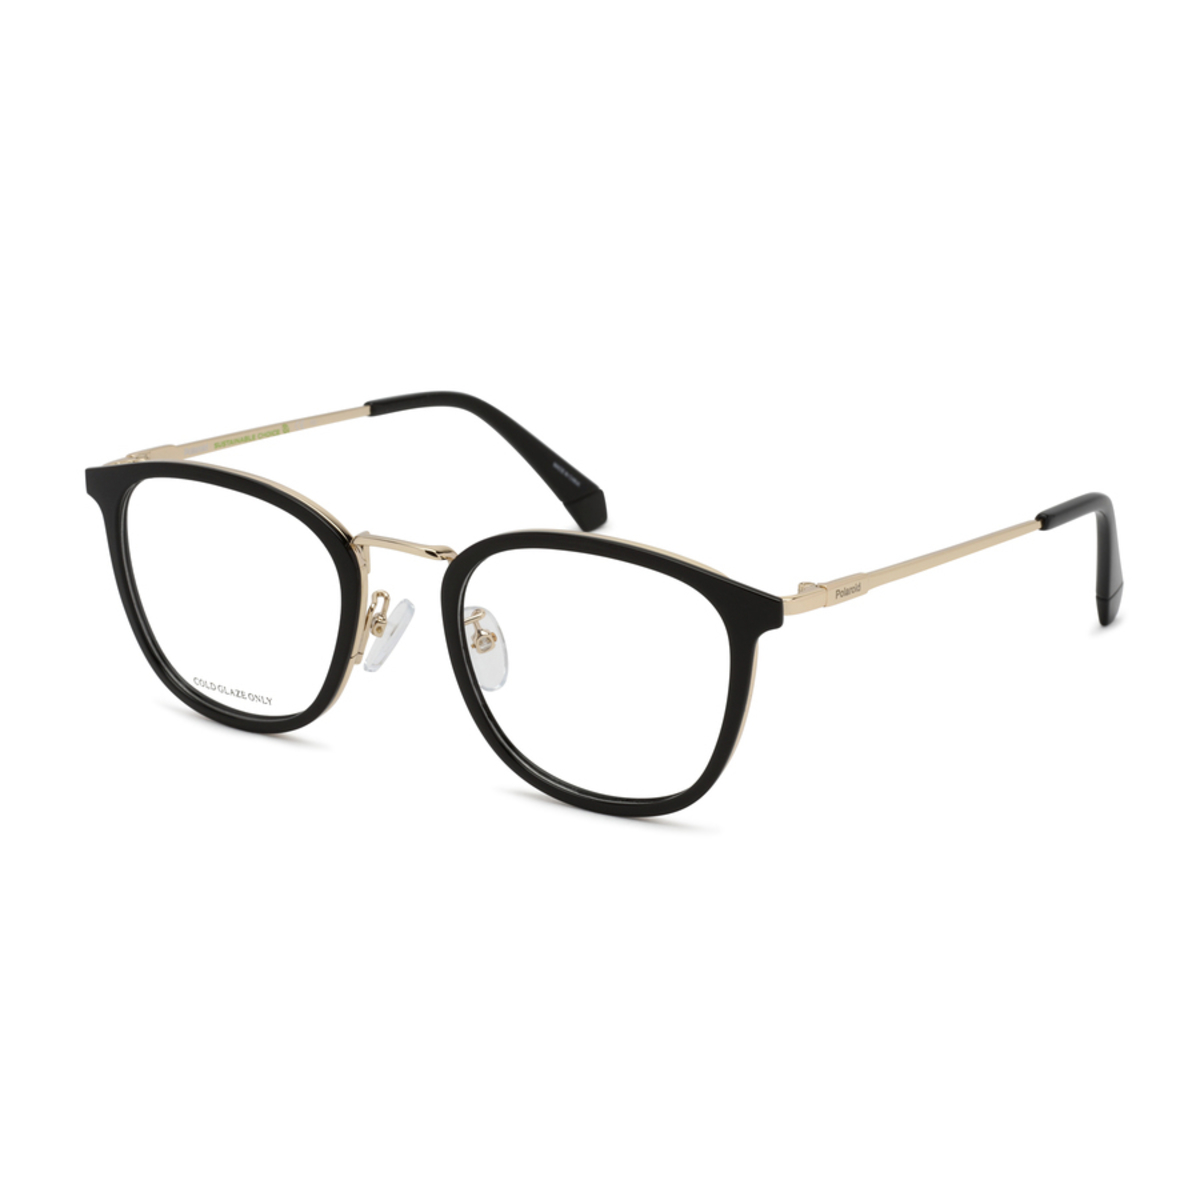 Polaroid Unisex Black Rectangular Eyeglass Frames PLDD439/G02M20052